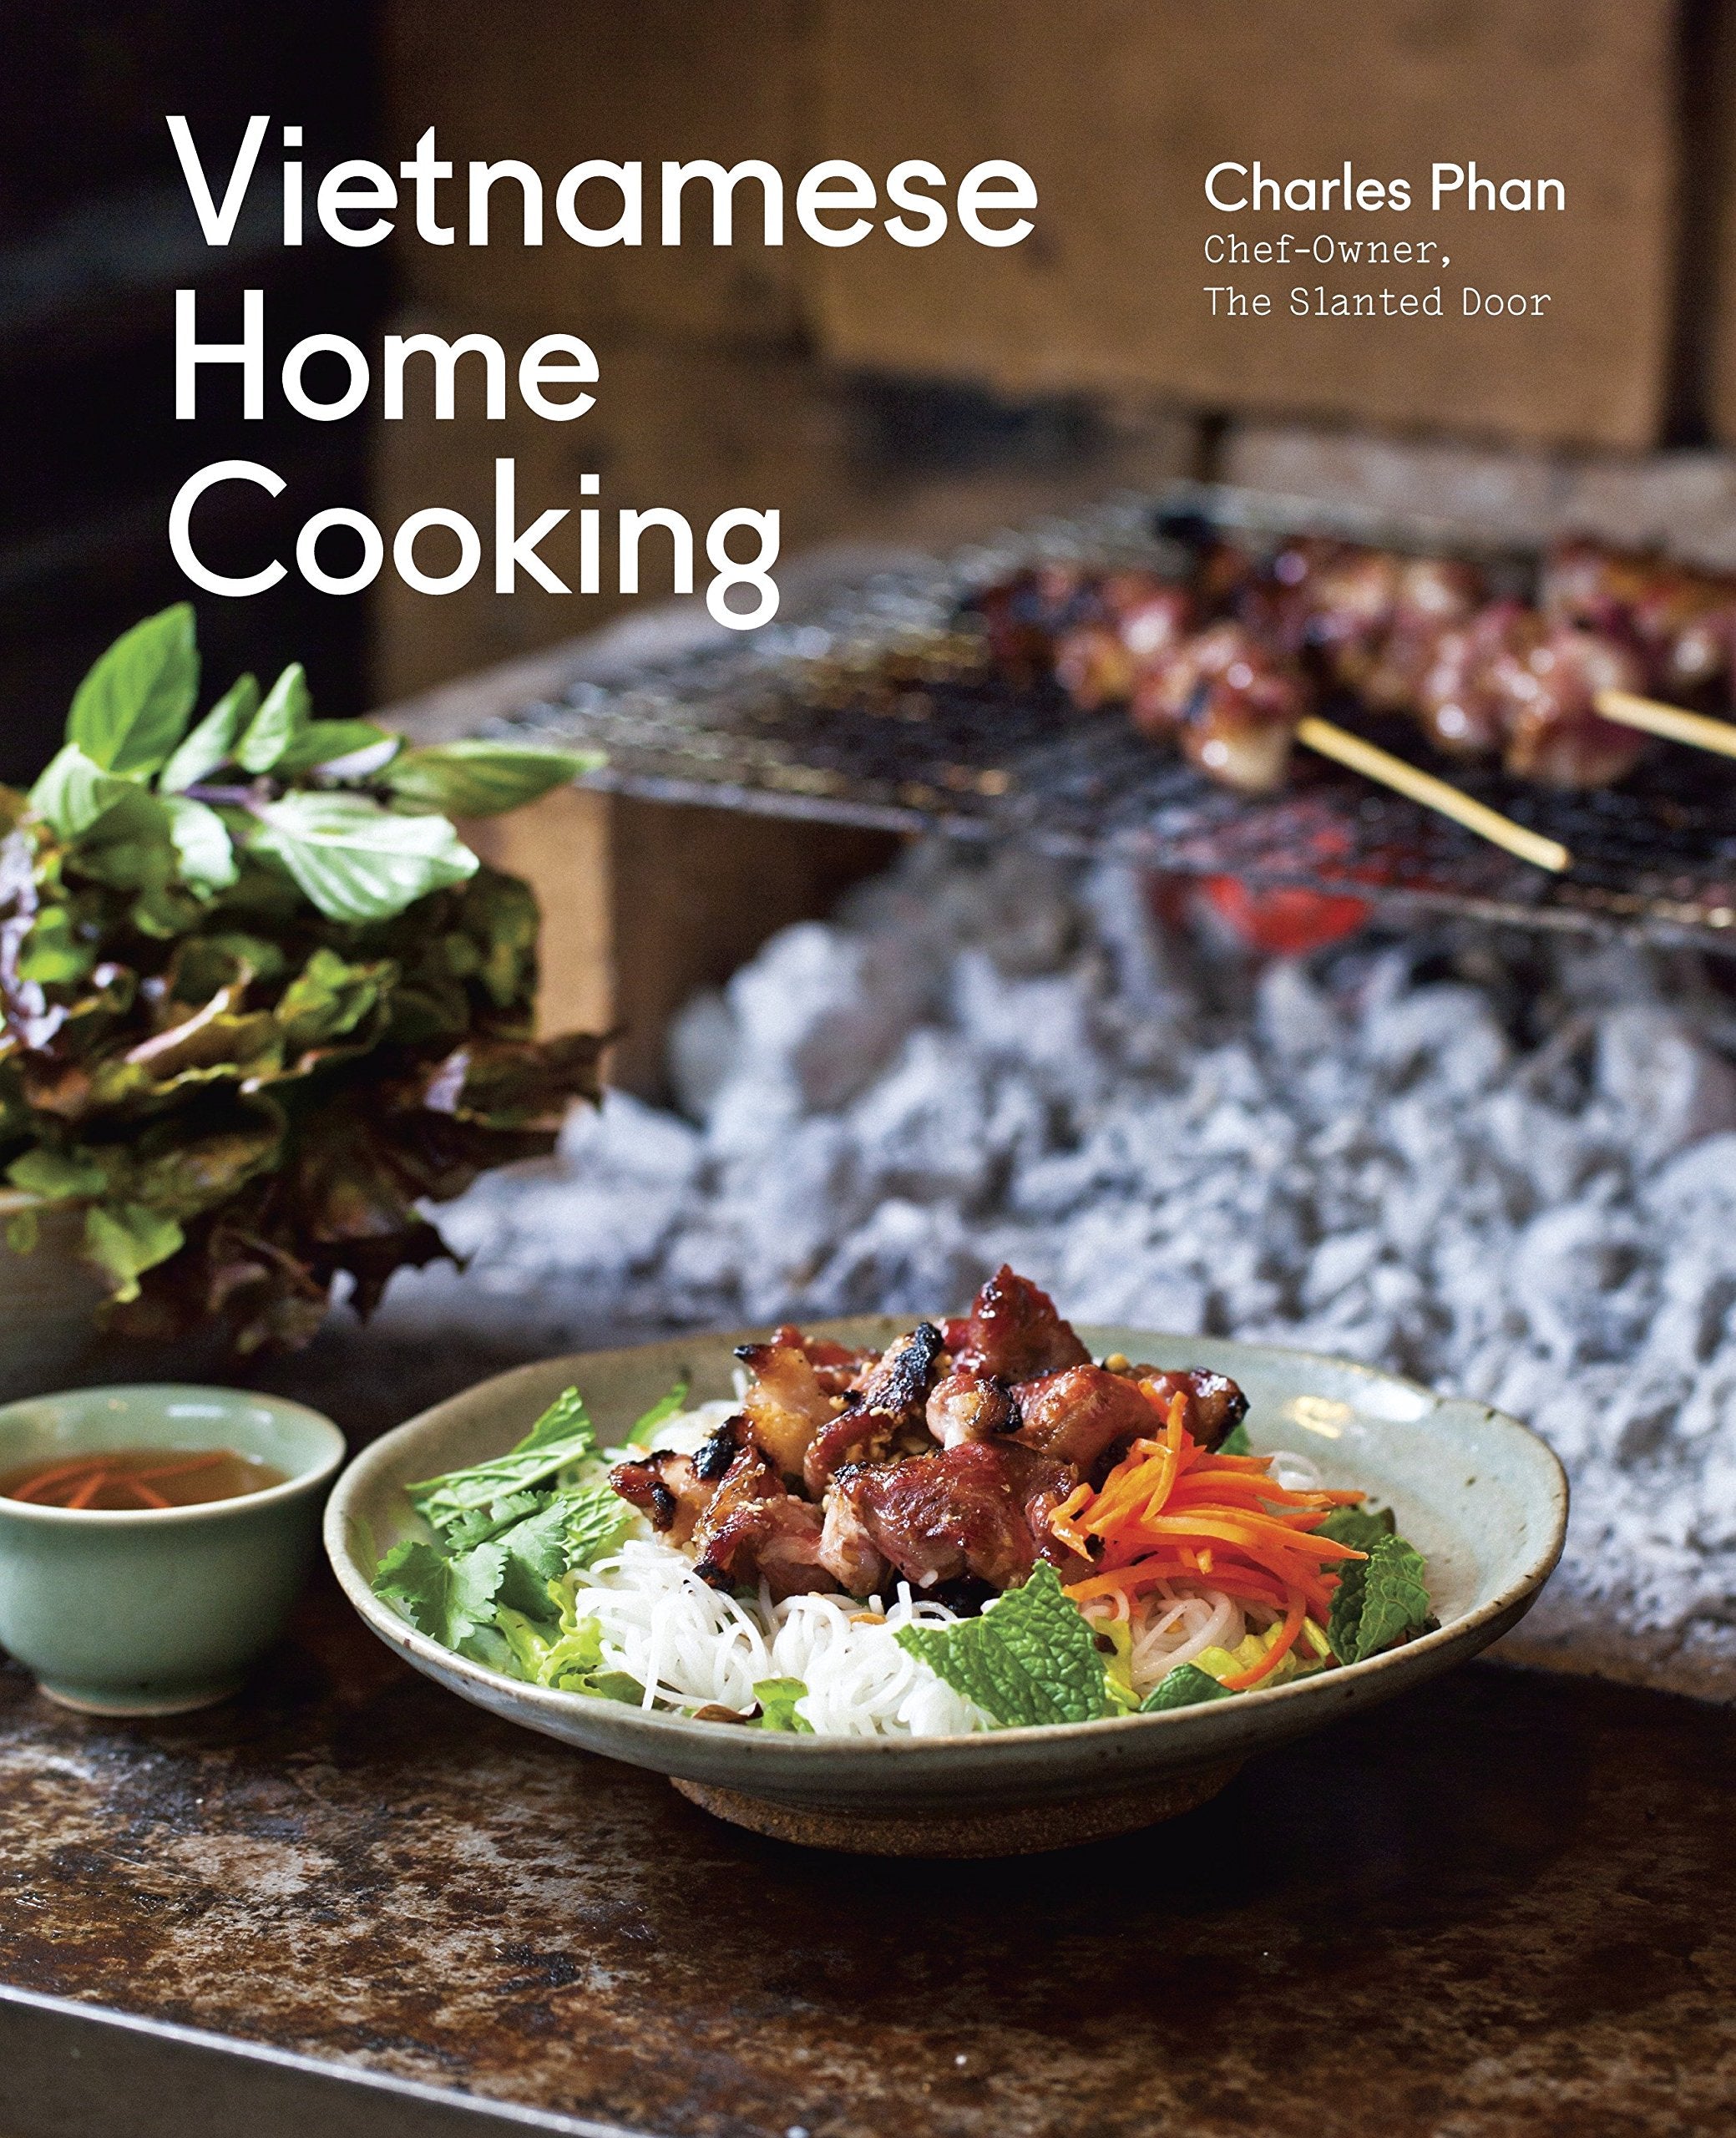 Vietnamese Home Cooking (Charles Phan)